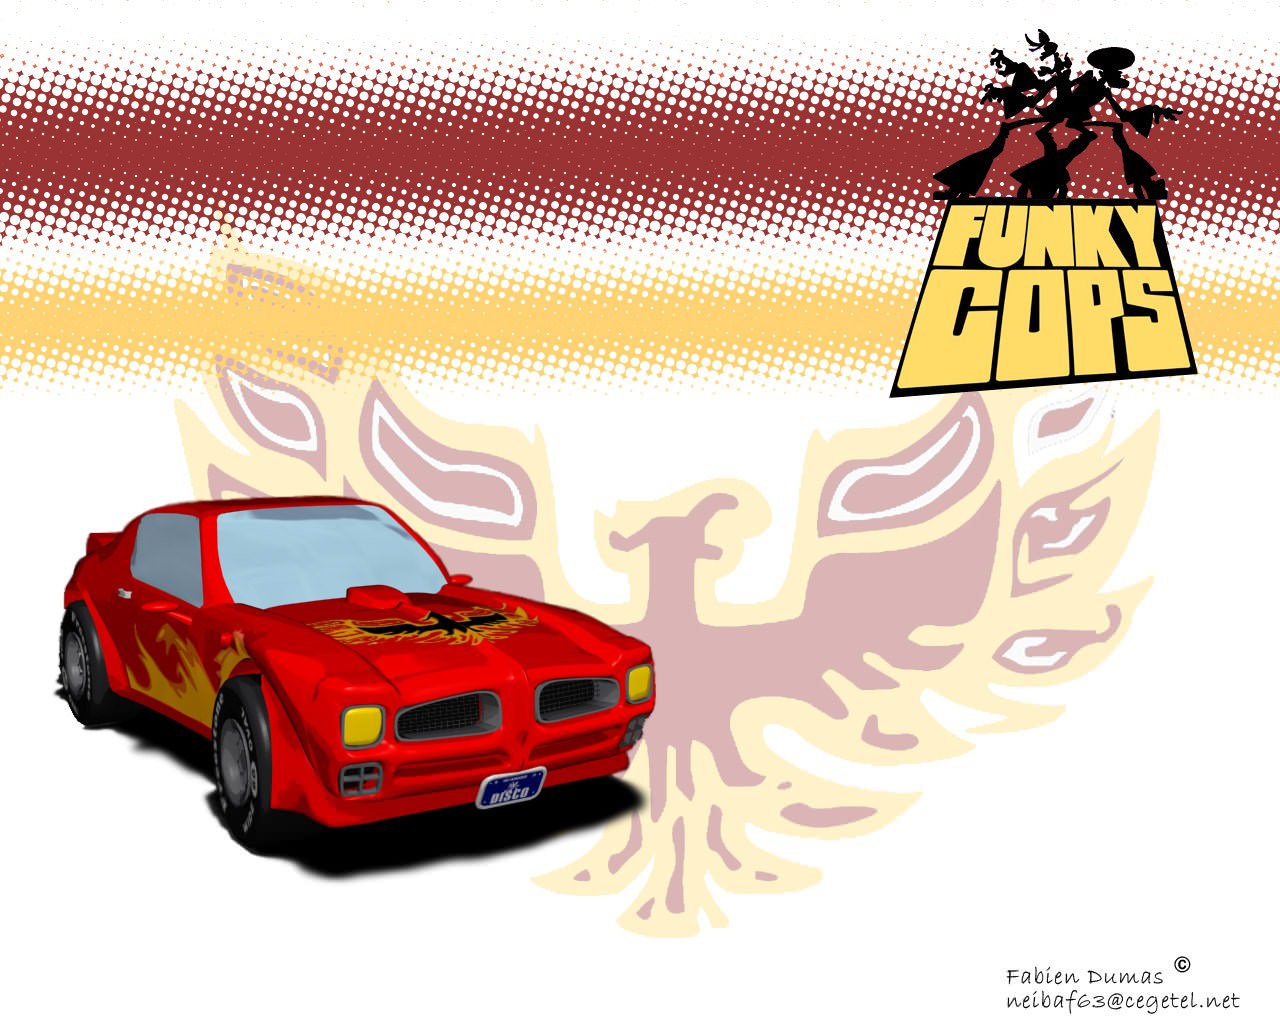 Funky Cops Funky Car